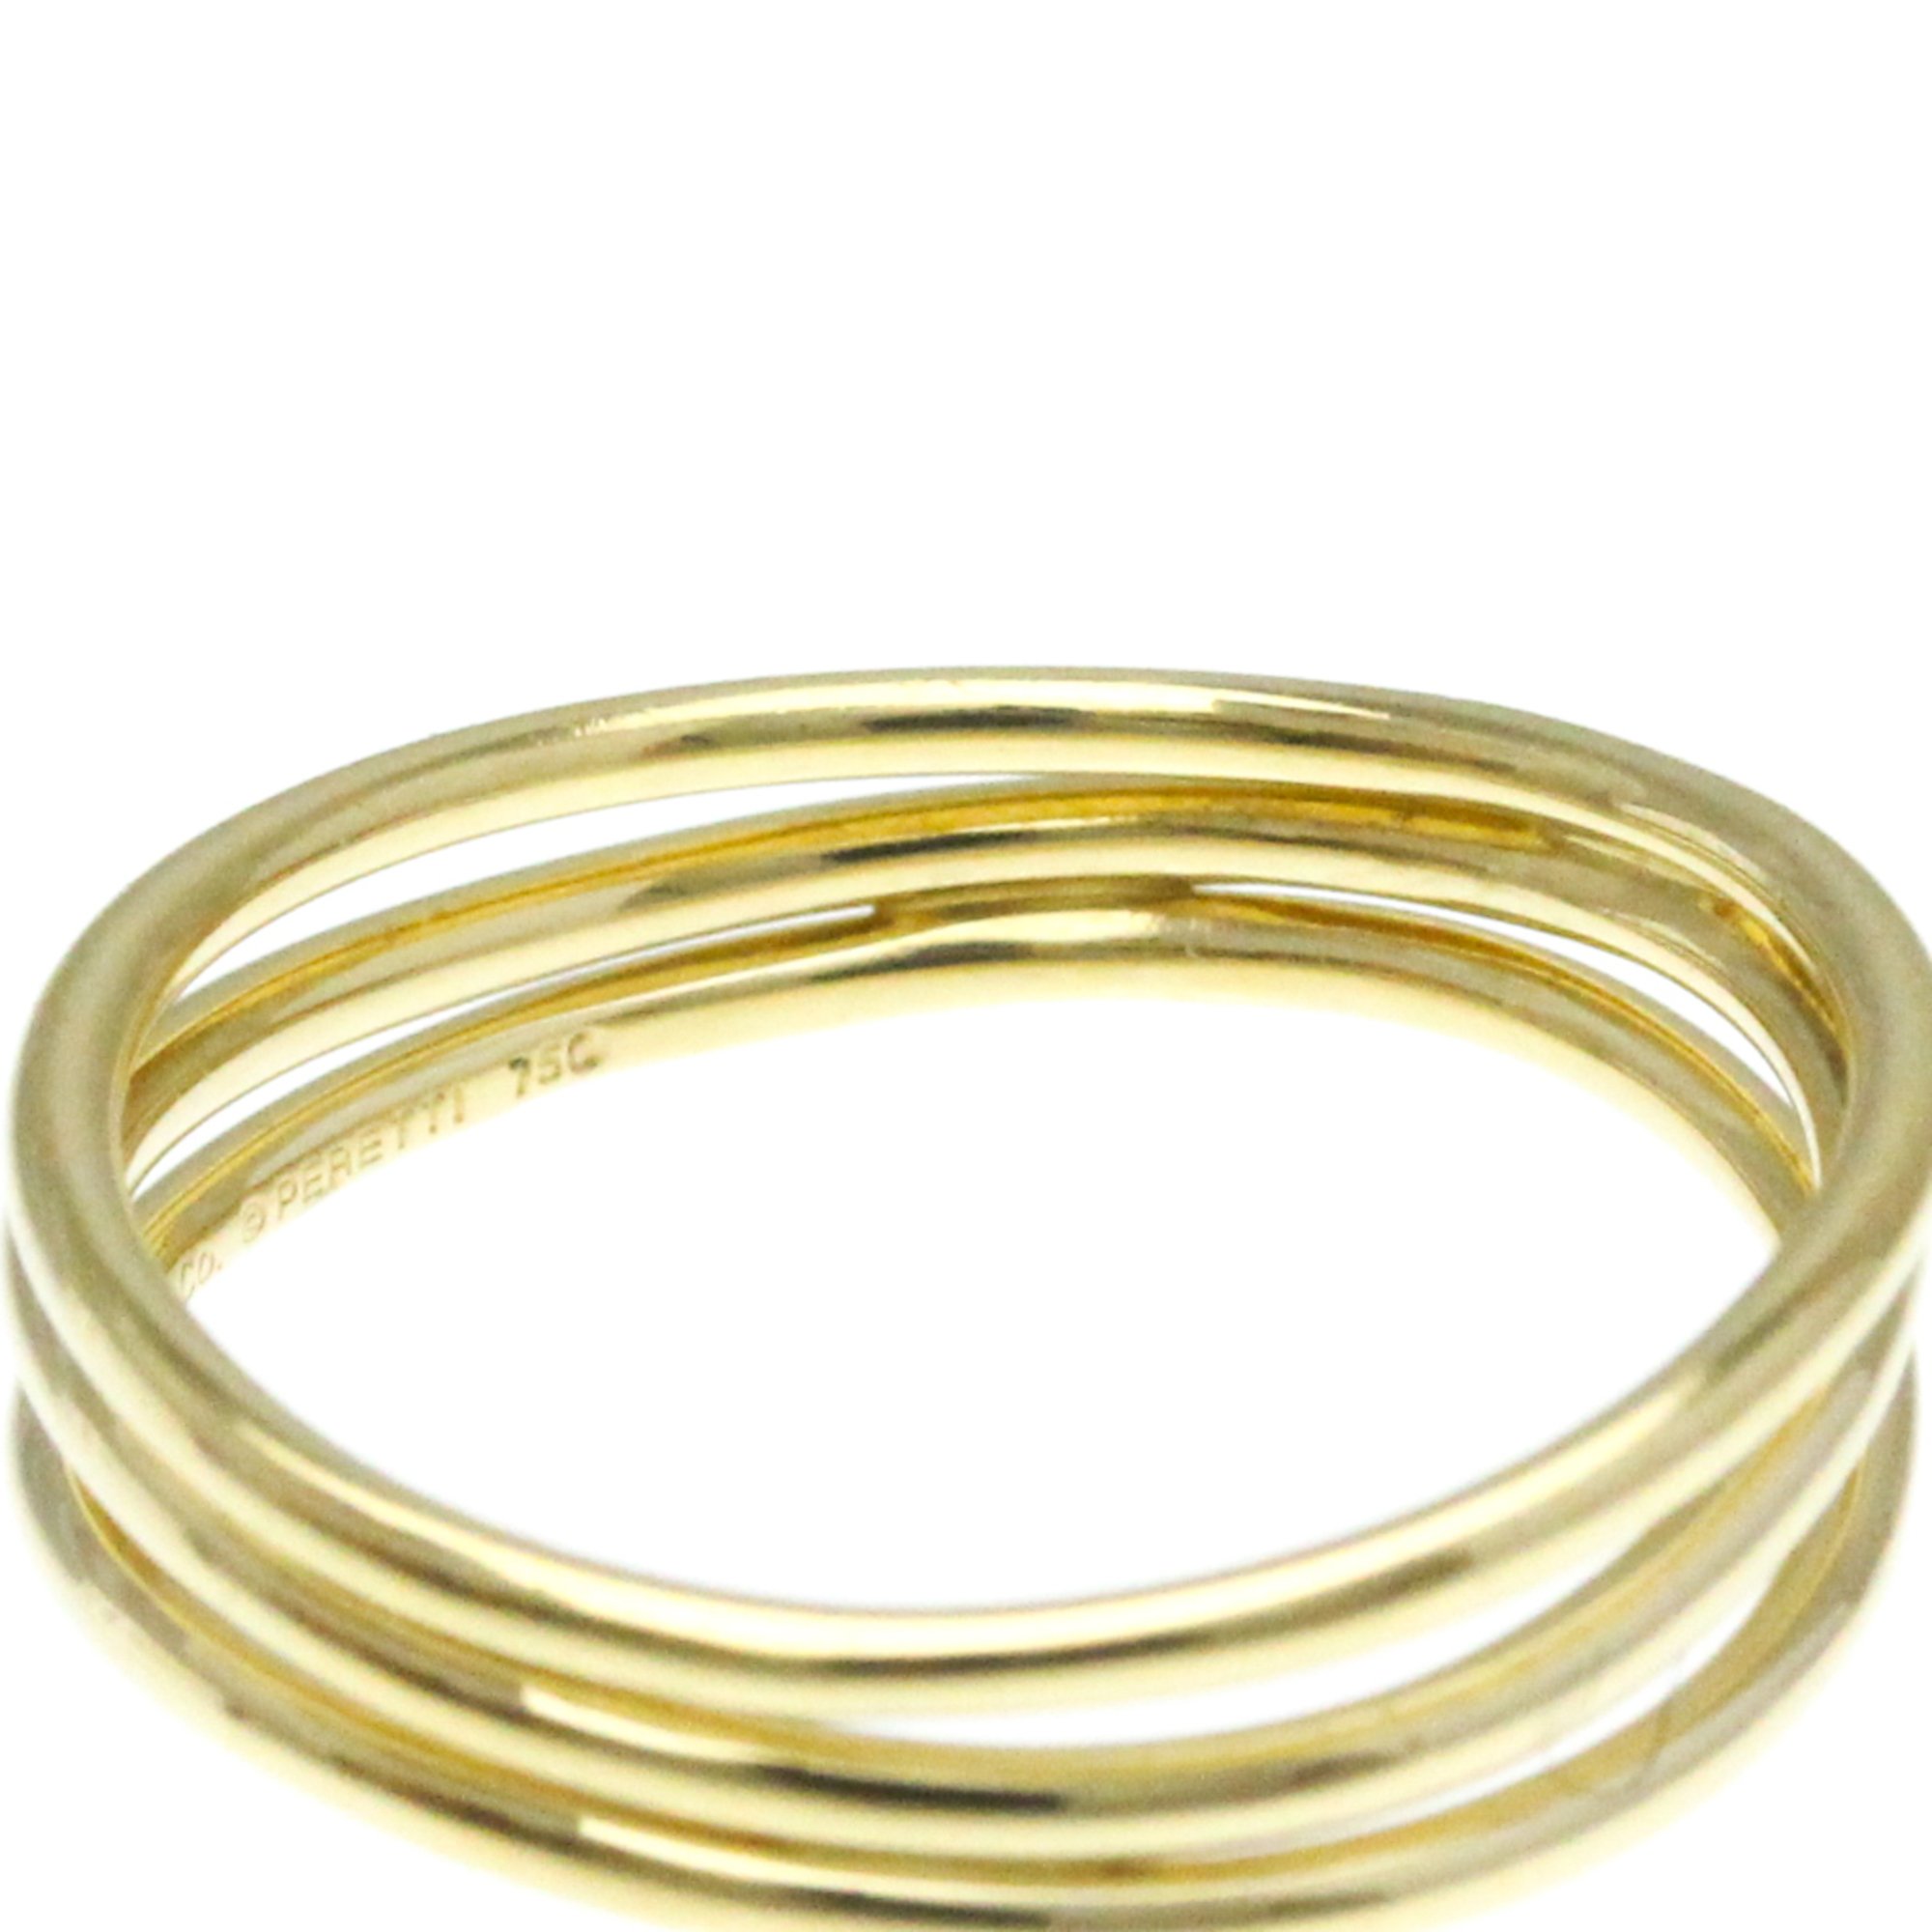 Tiffany Wave Ring Yellow Gold (18K) Fashion No Stone Band Ring Gold